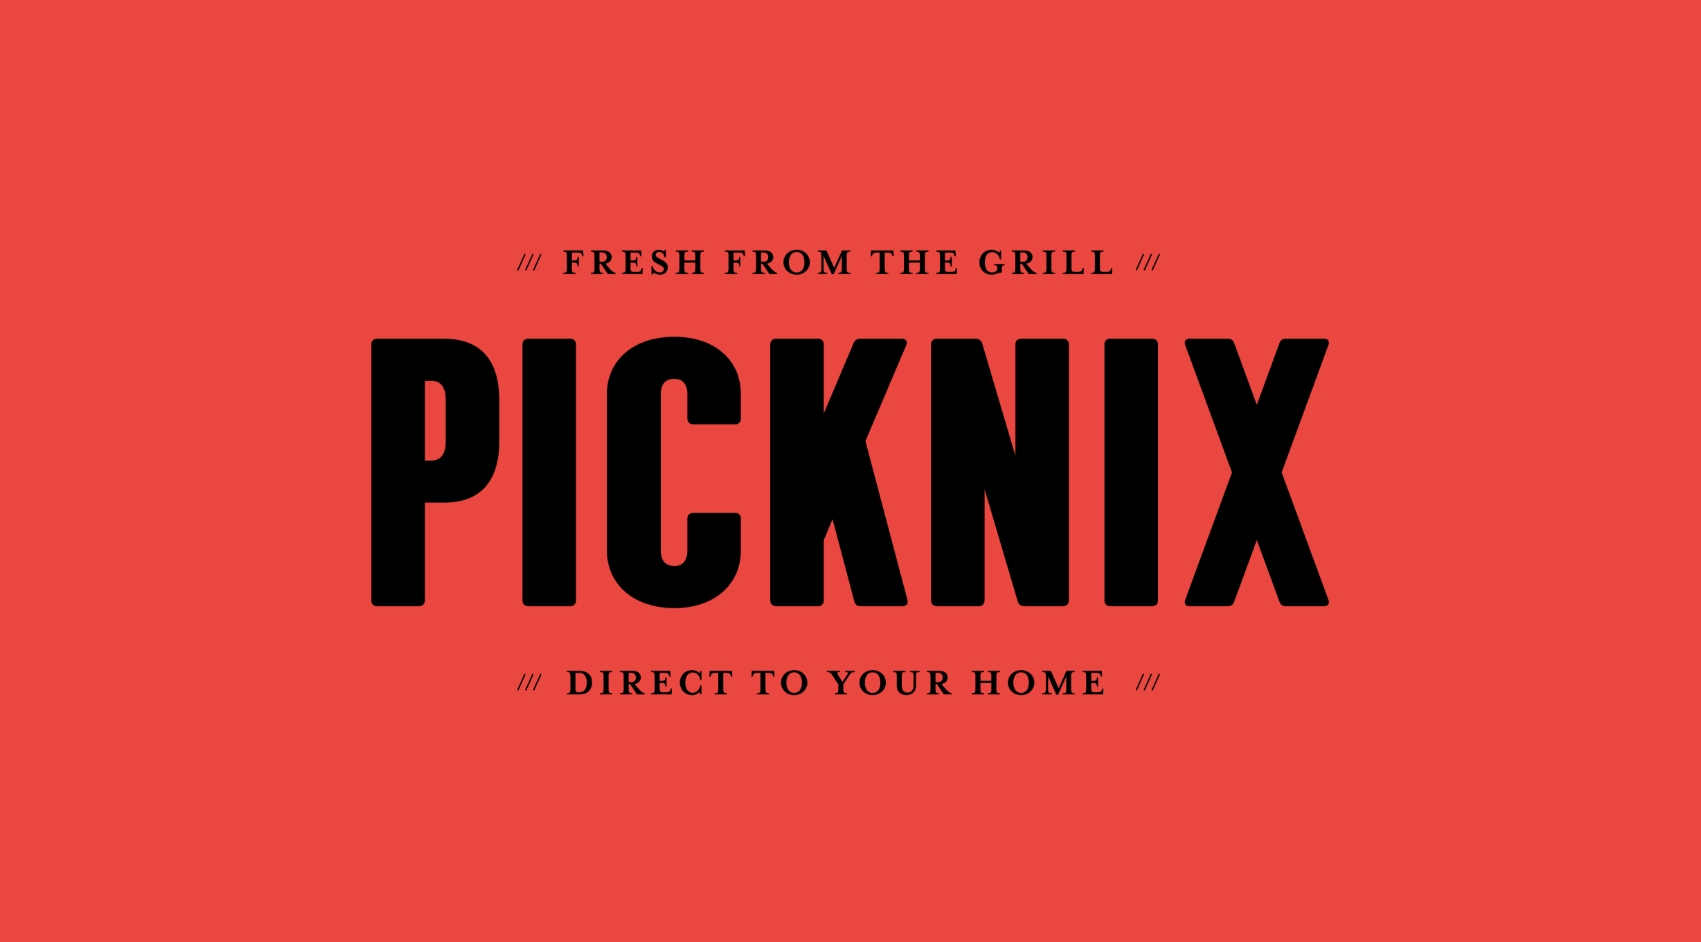 picknix logo